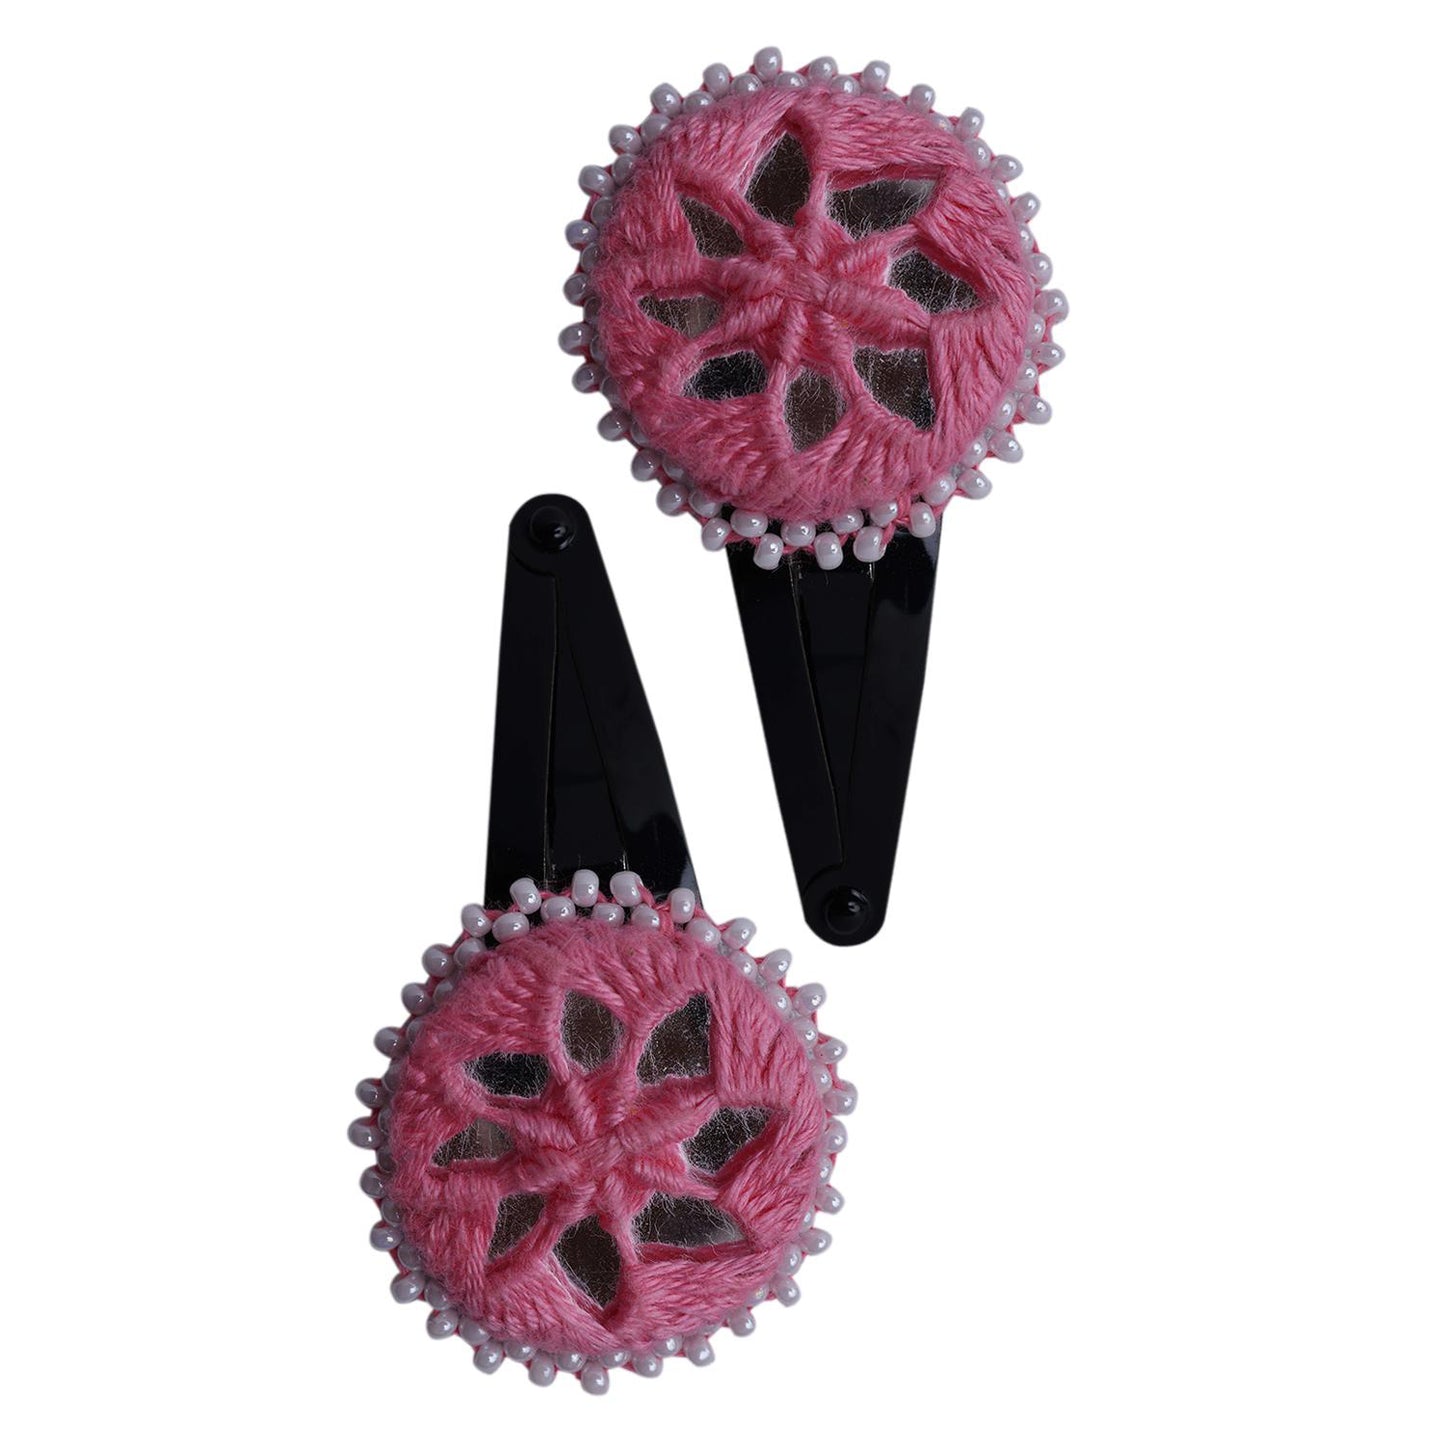 Artisanal Elegance: Handcrafted Tic Tac Pins by Divyang & Rural Women- Light Pink